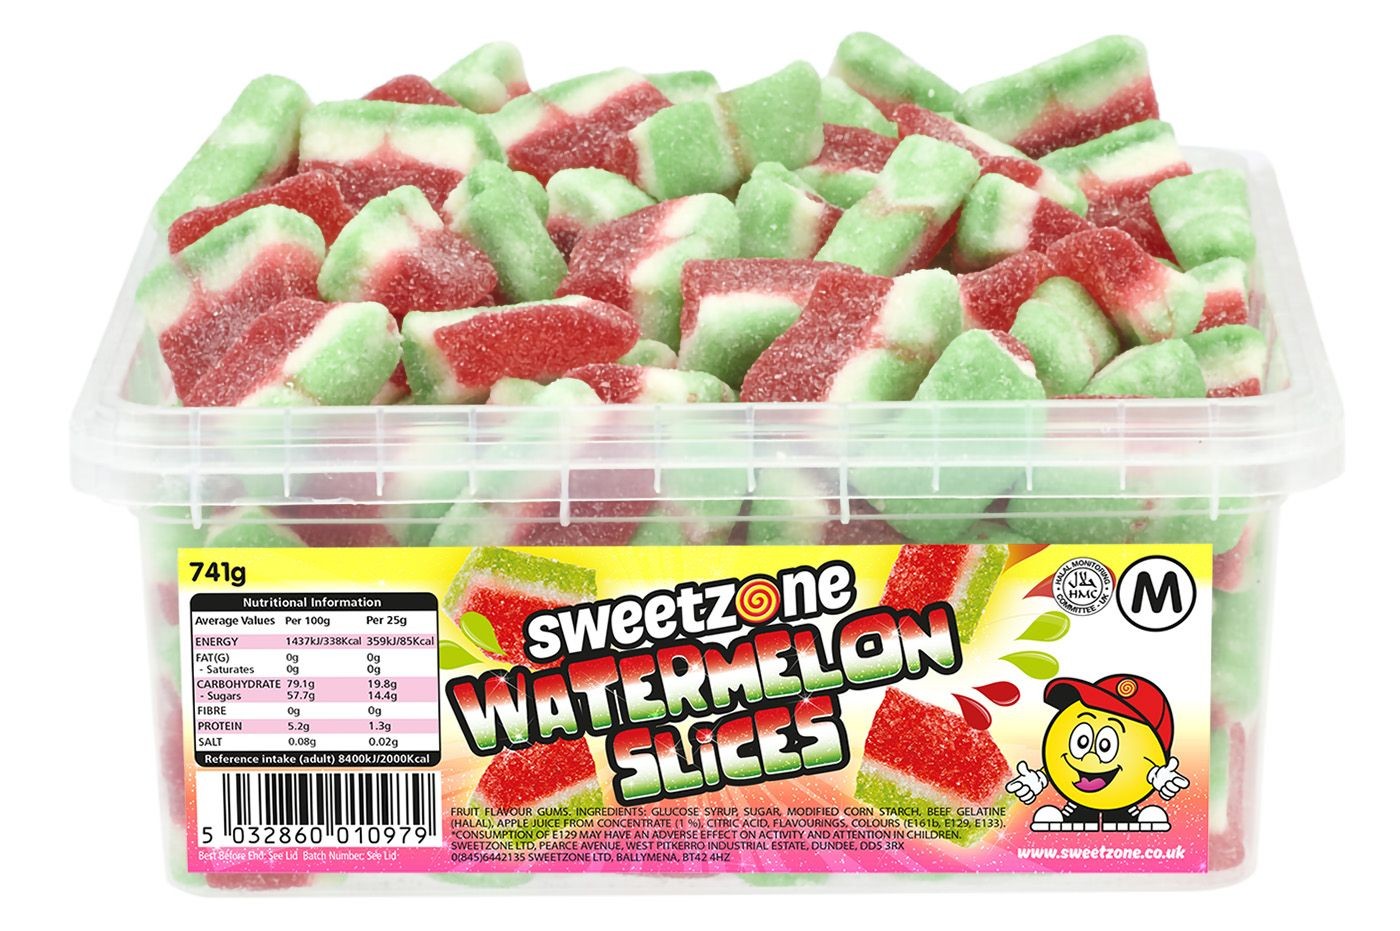 Watermelon Slices Tub (Sweetzone) 741g